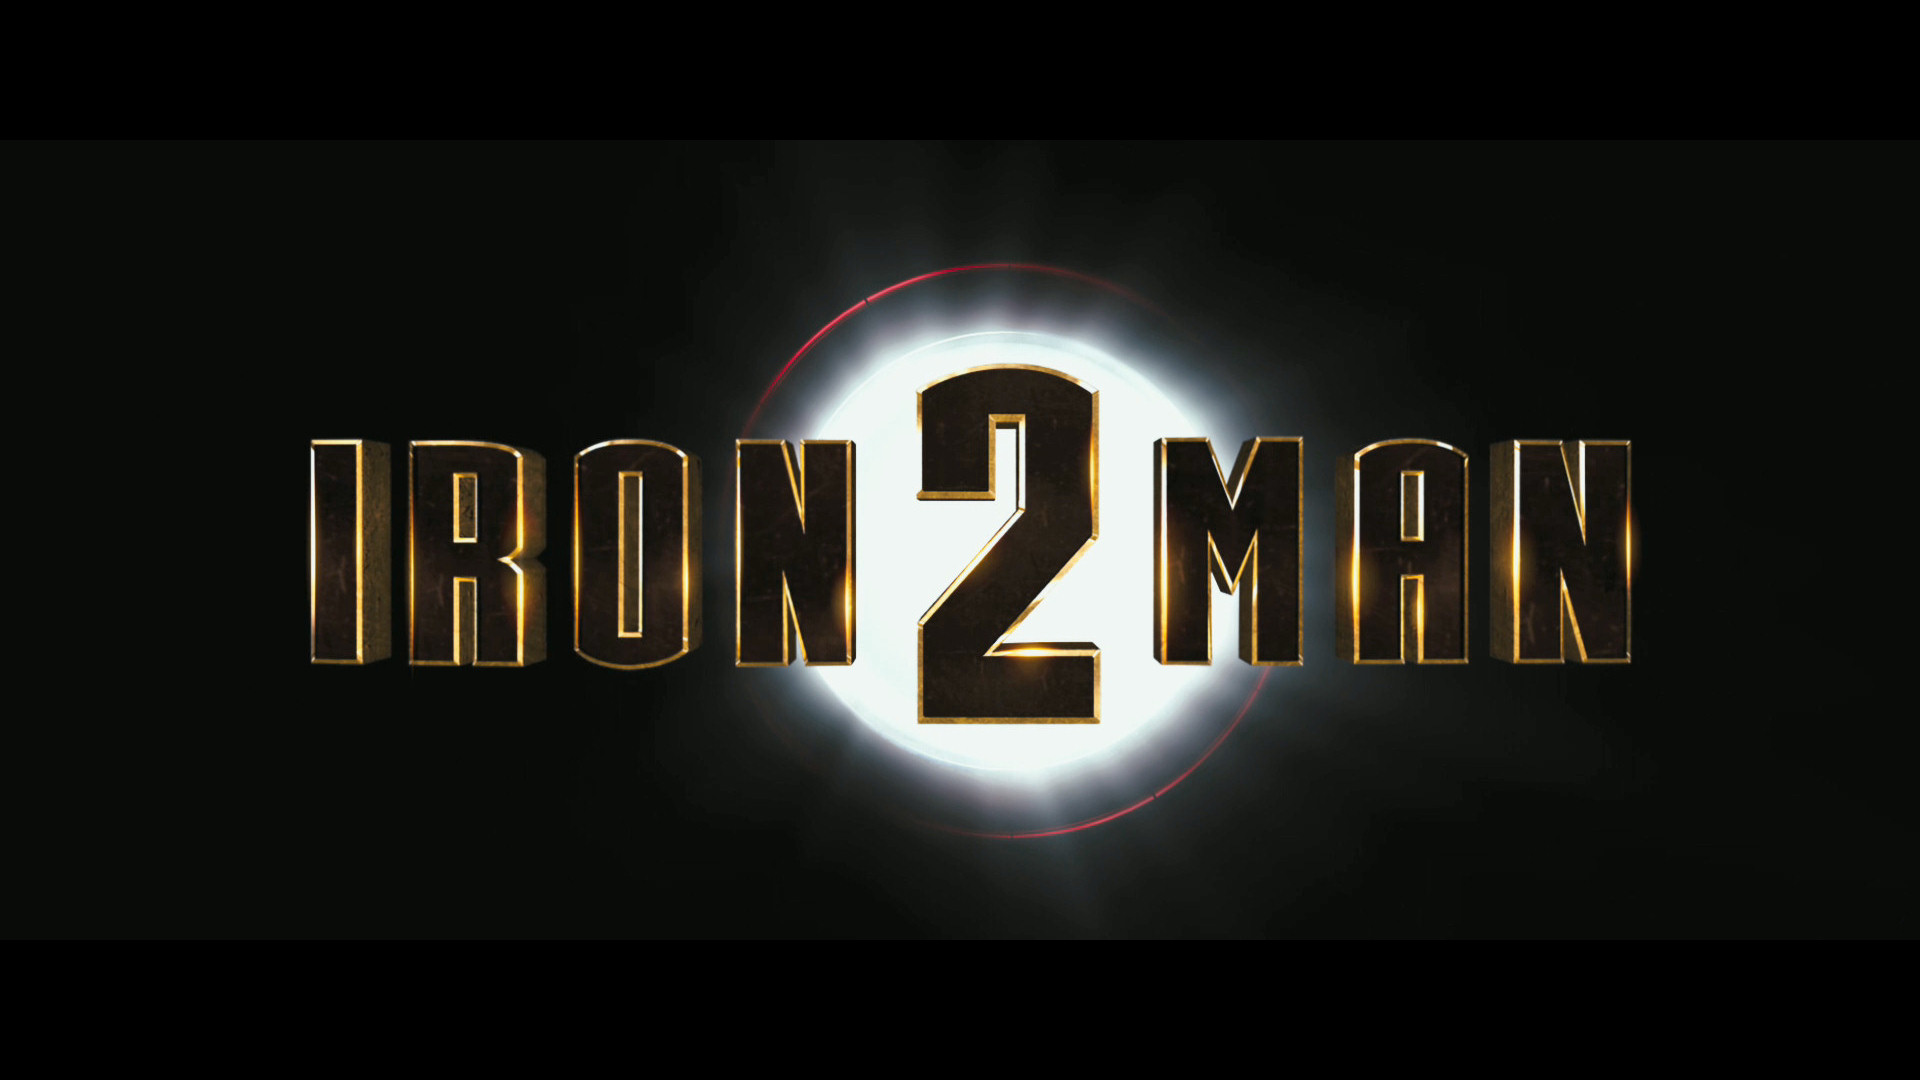 Download the Iron Man 2 Wallpaper, Iron Man 2 iPhone Wallpaper